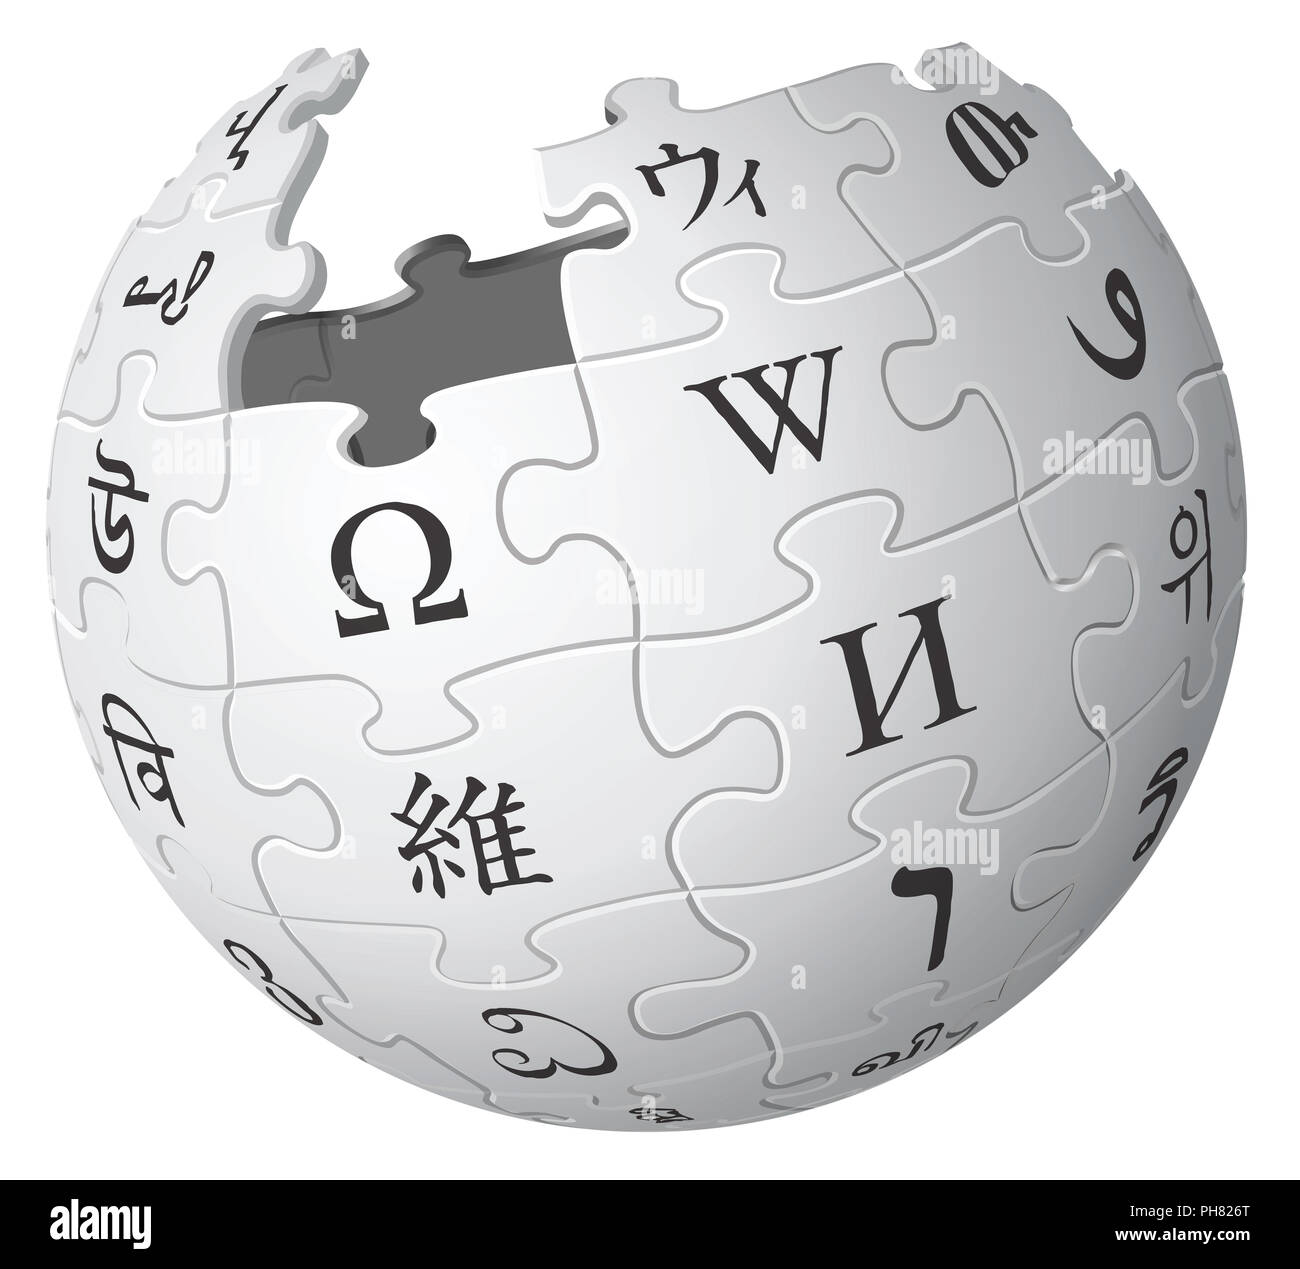 Wikipedia logo illustration search service knowledge Stock Photo